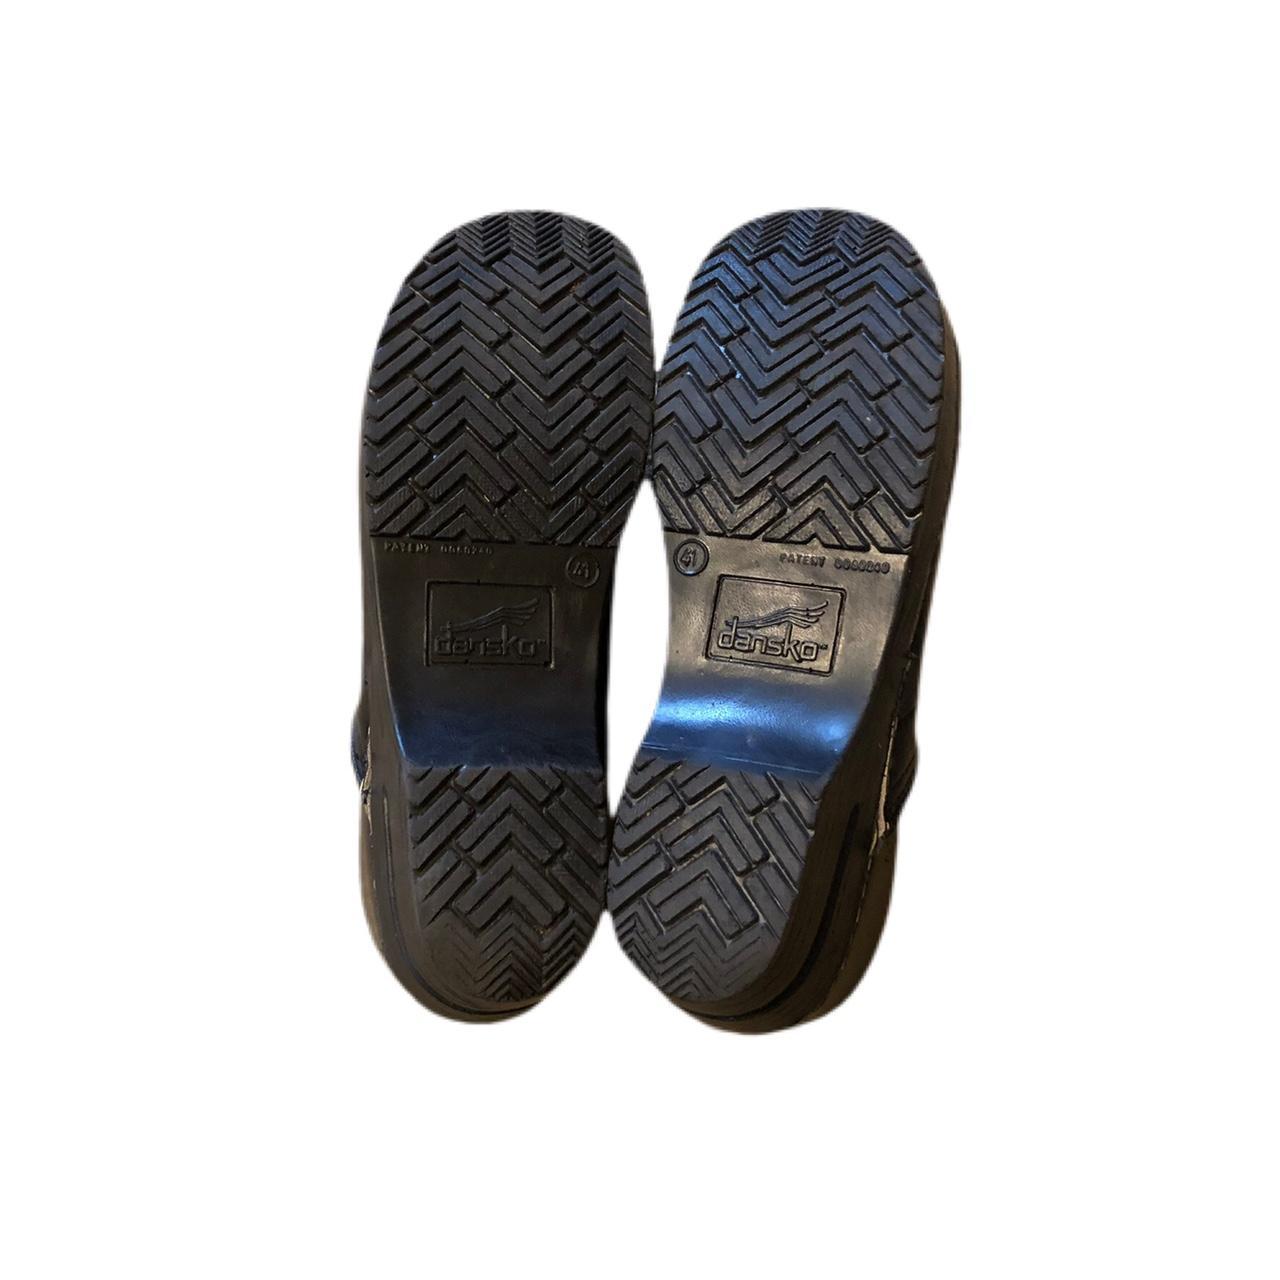 Dansko Professional Leather Clogs Black Shoes - Depop